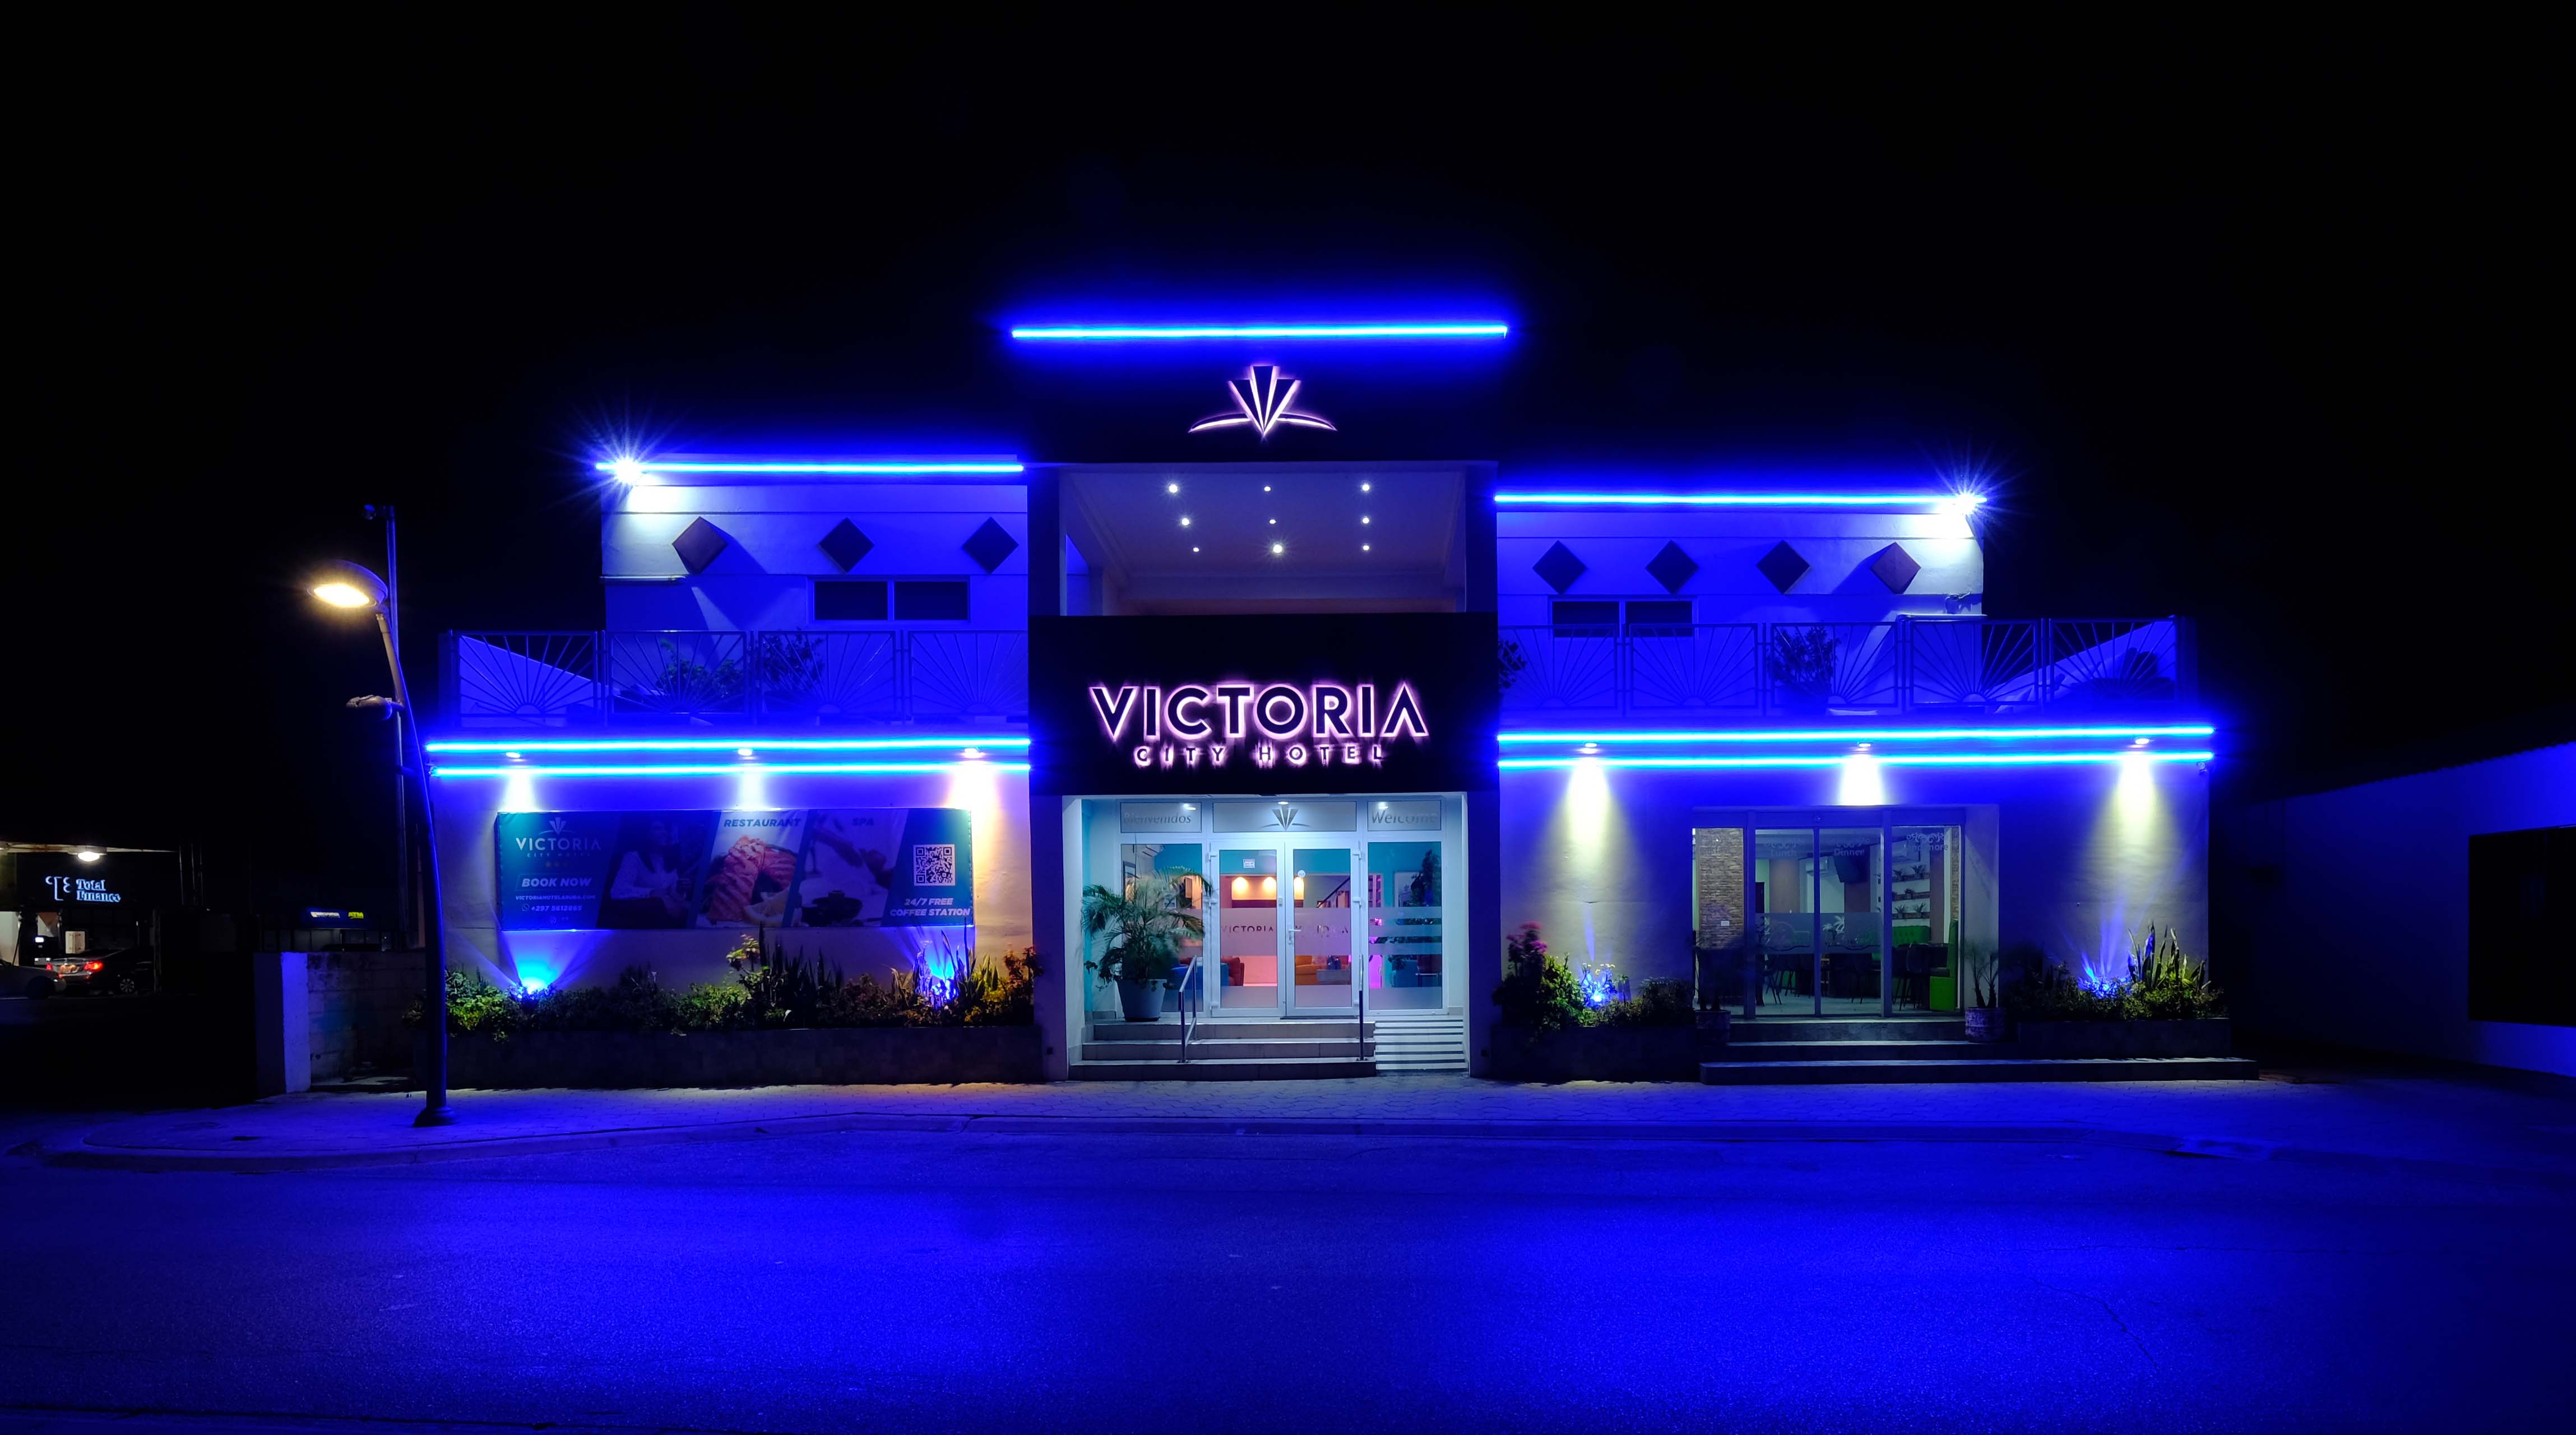 Victoria City Hotel Aruba ta ful operashonal ku 30 kamber despues di un mega renobashon